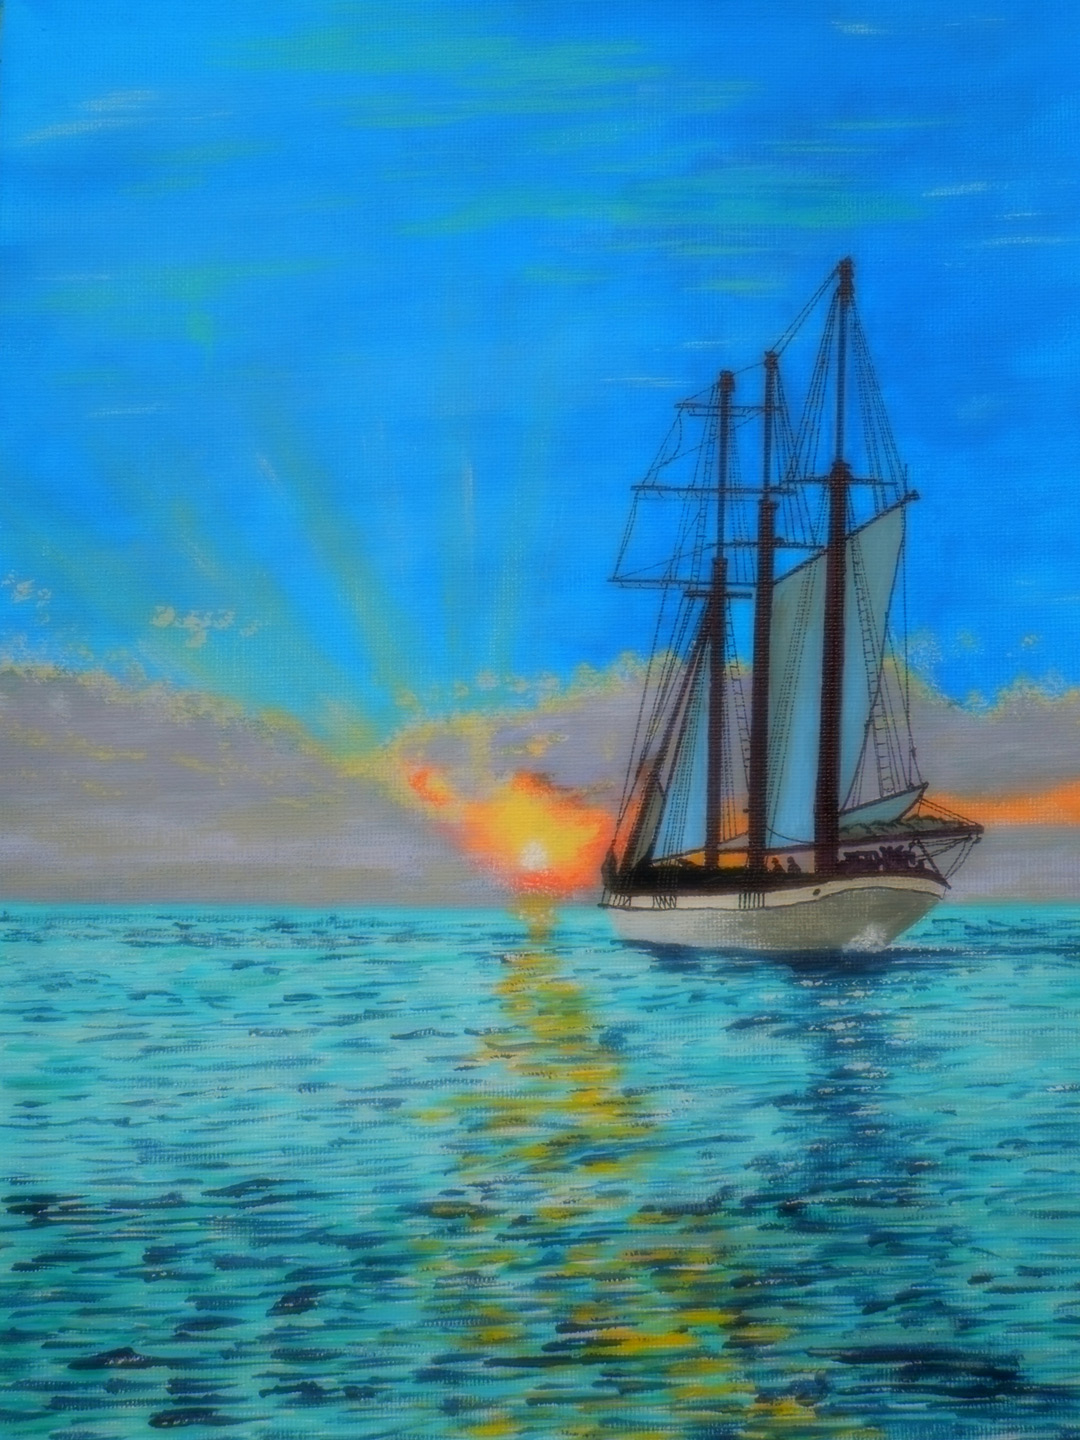 A sailboat heads towards a cloudy orange sunset on the horizon.